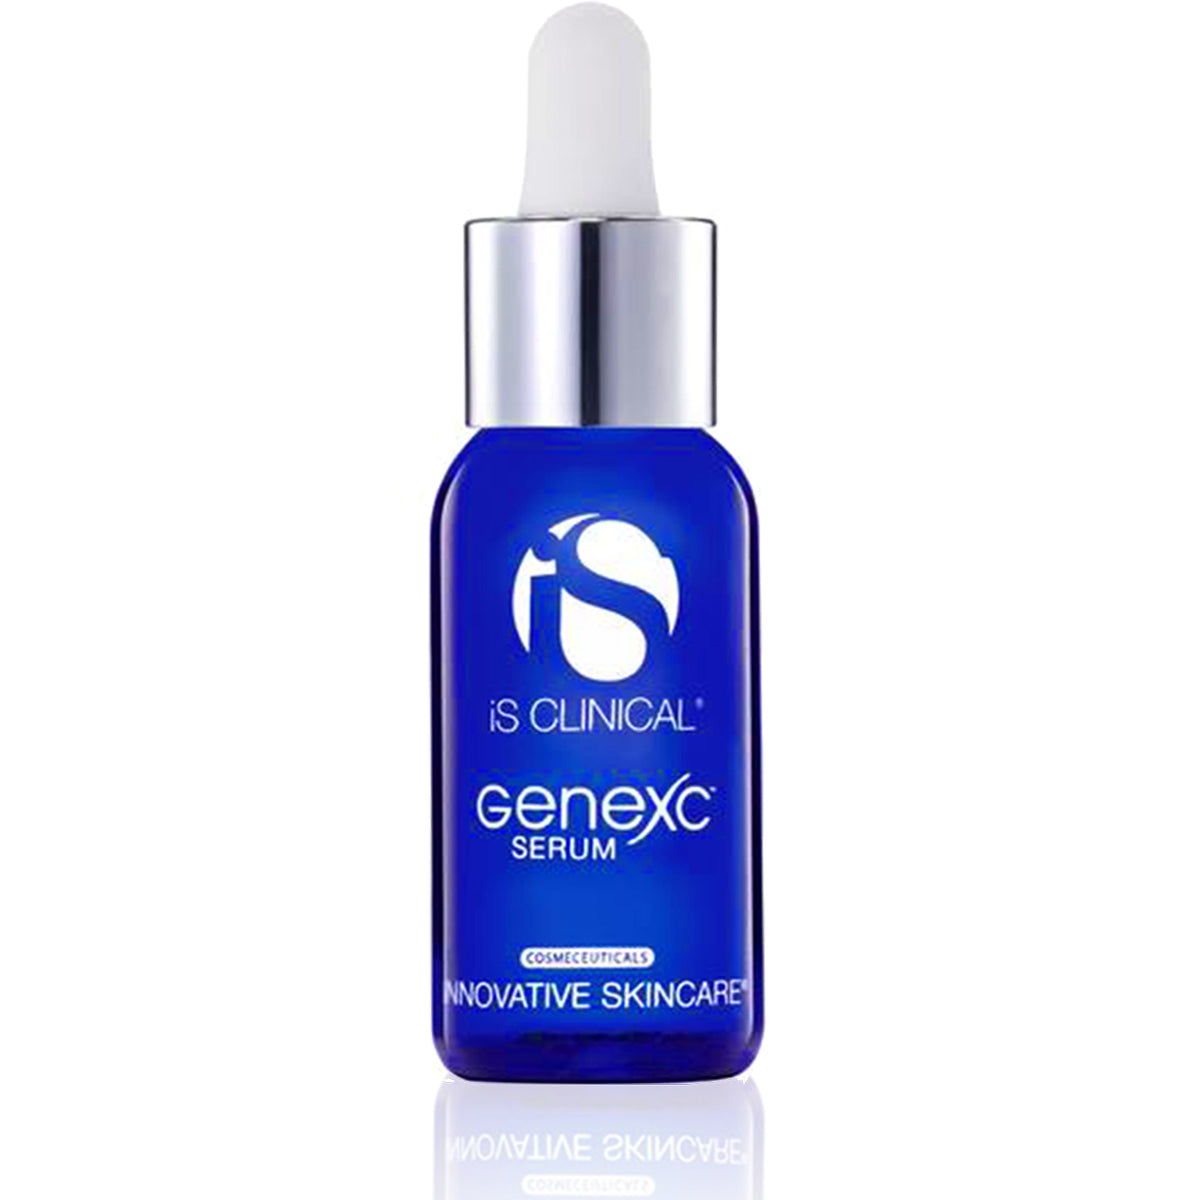 IS CLINICAL Core Antioxidant Serum | GeneXC Serum 30ml